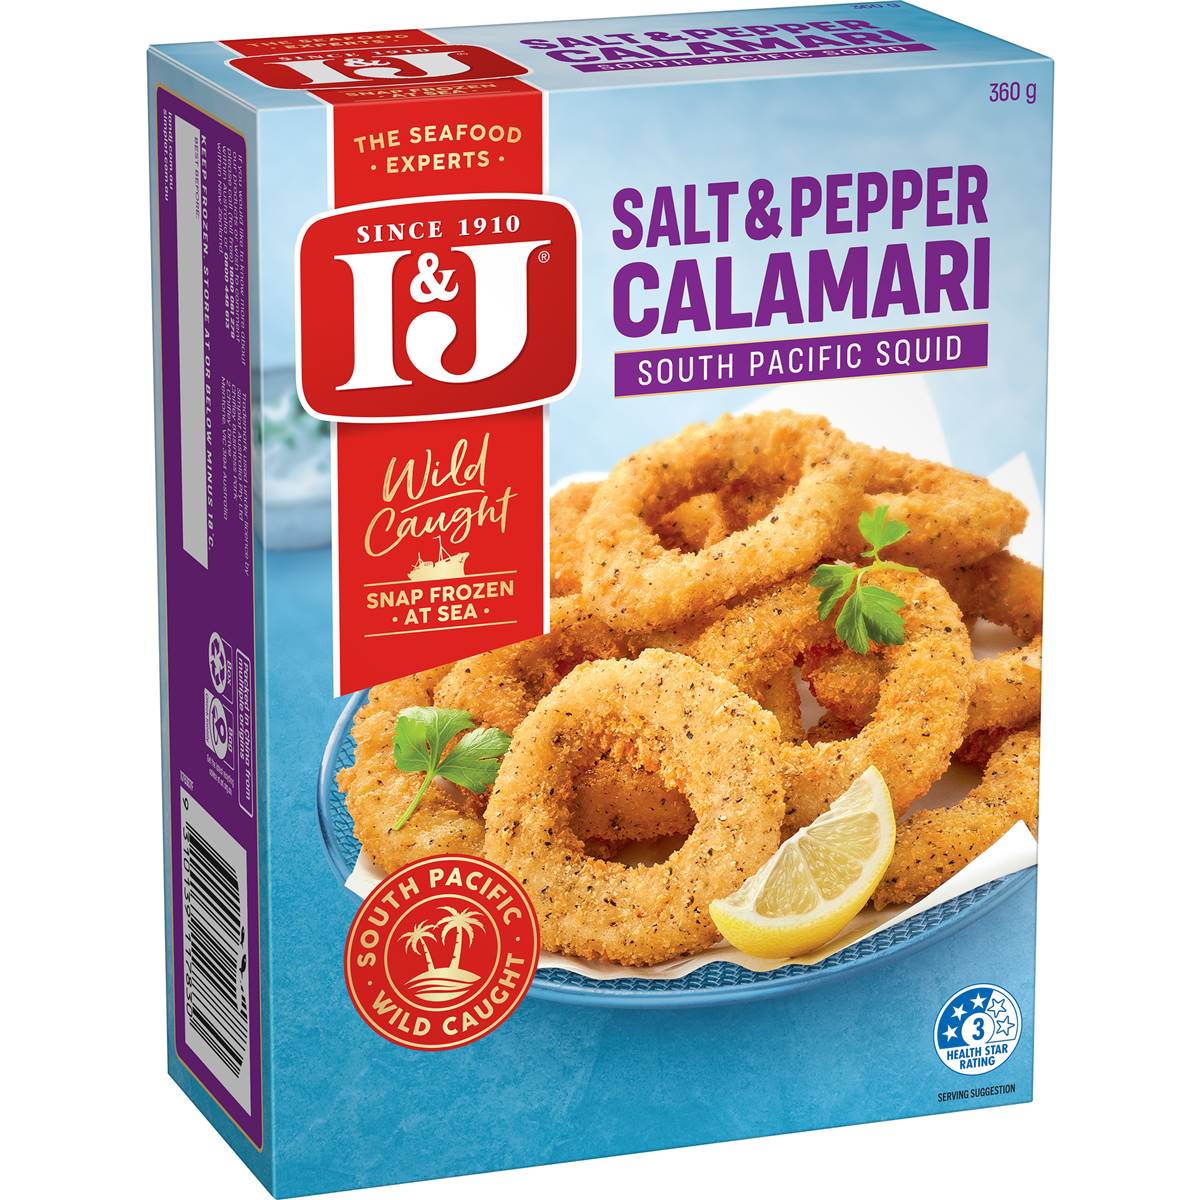 Calories in I & J Salt & Pepper Calamari